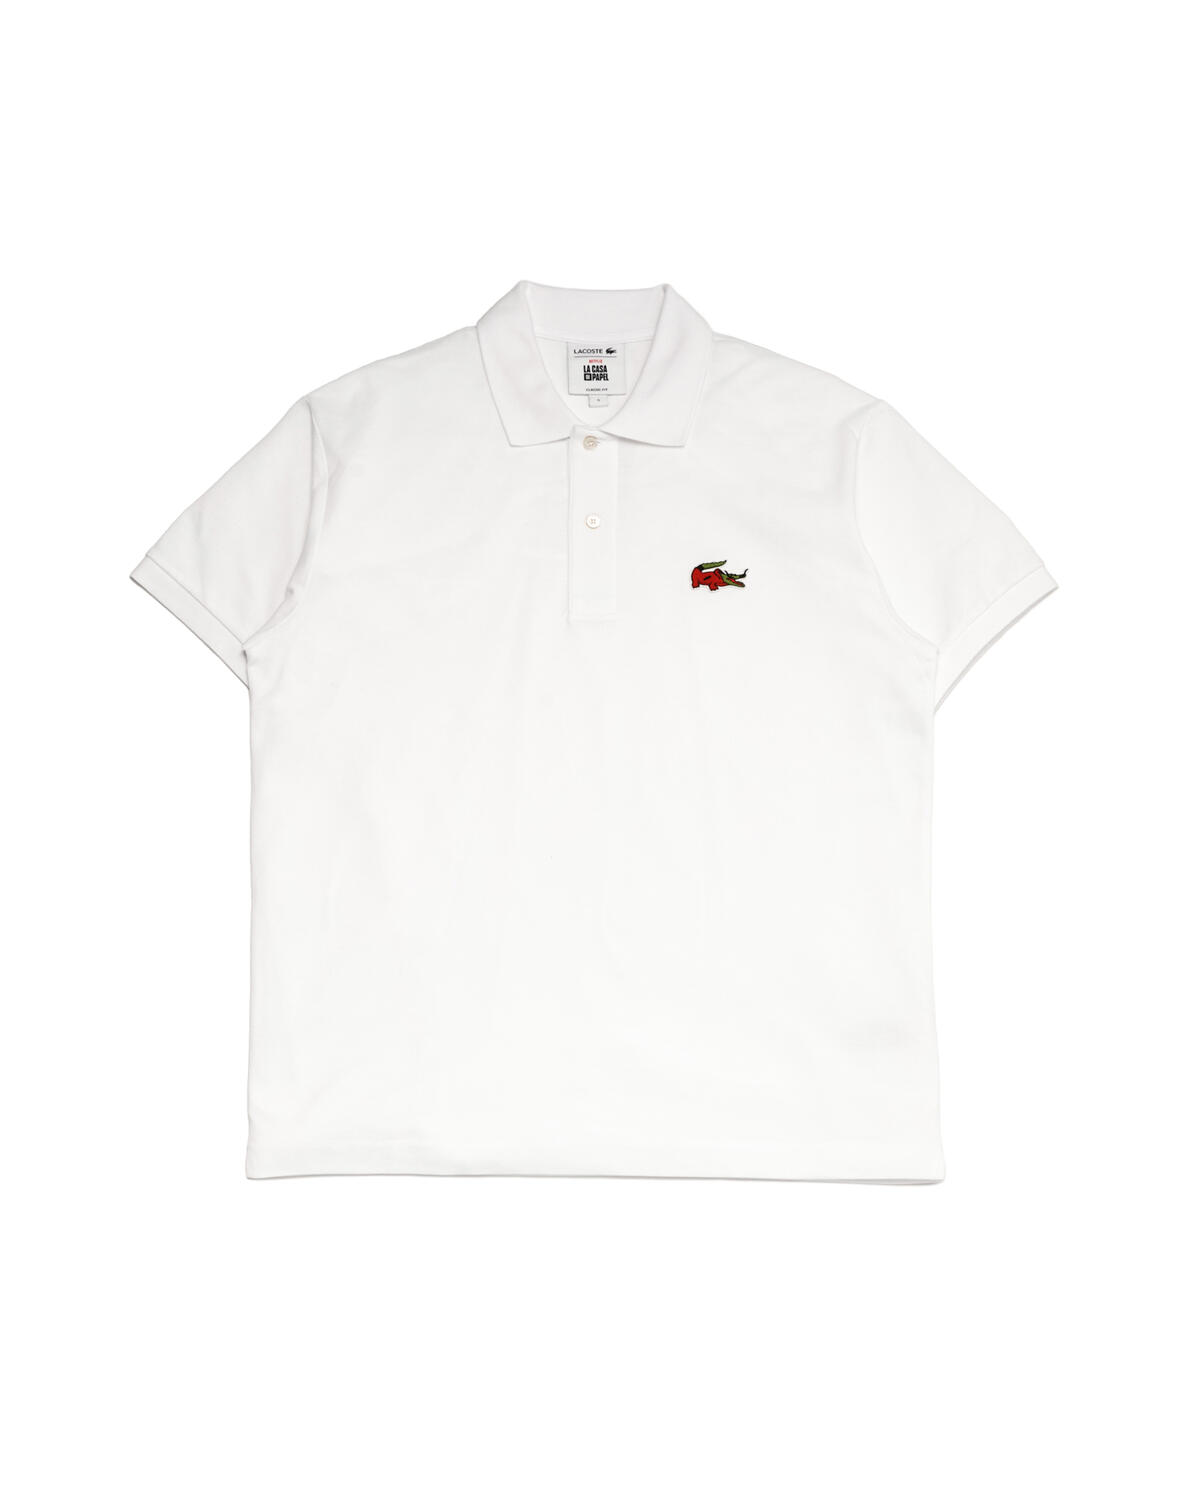 Money Heist x Lacoste Limited Edition Polo Shirt | Netflix Shop XL